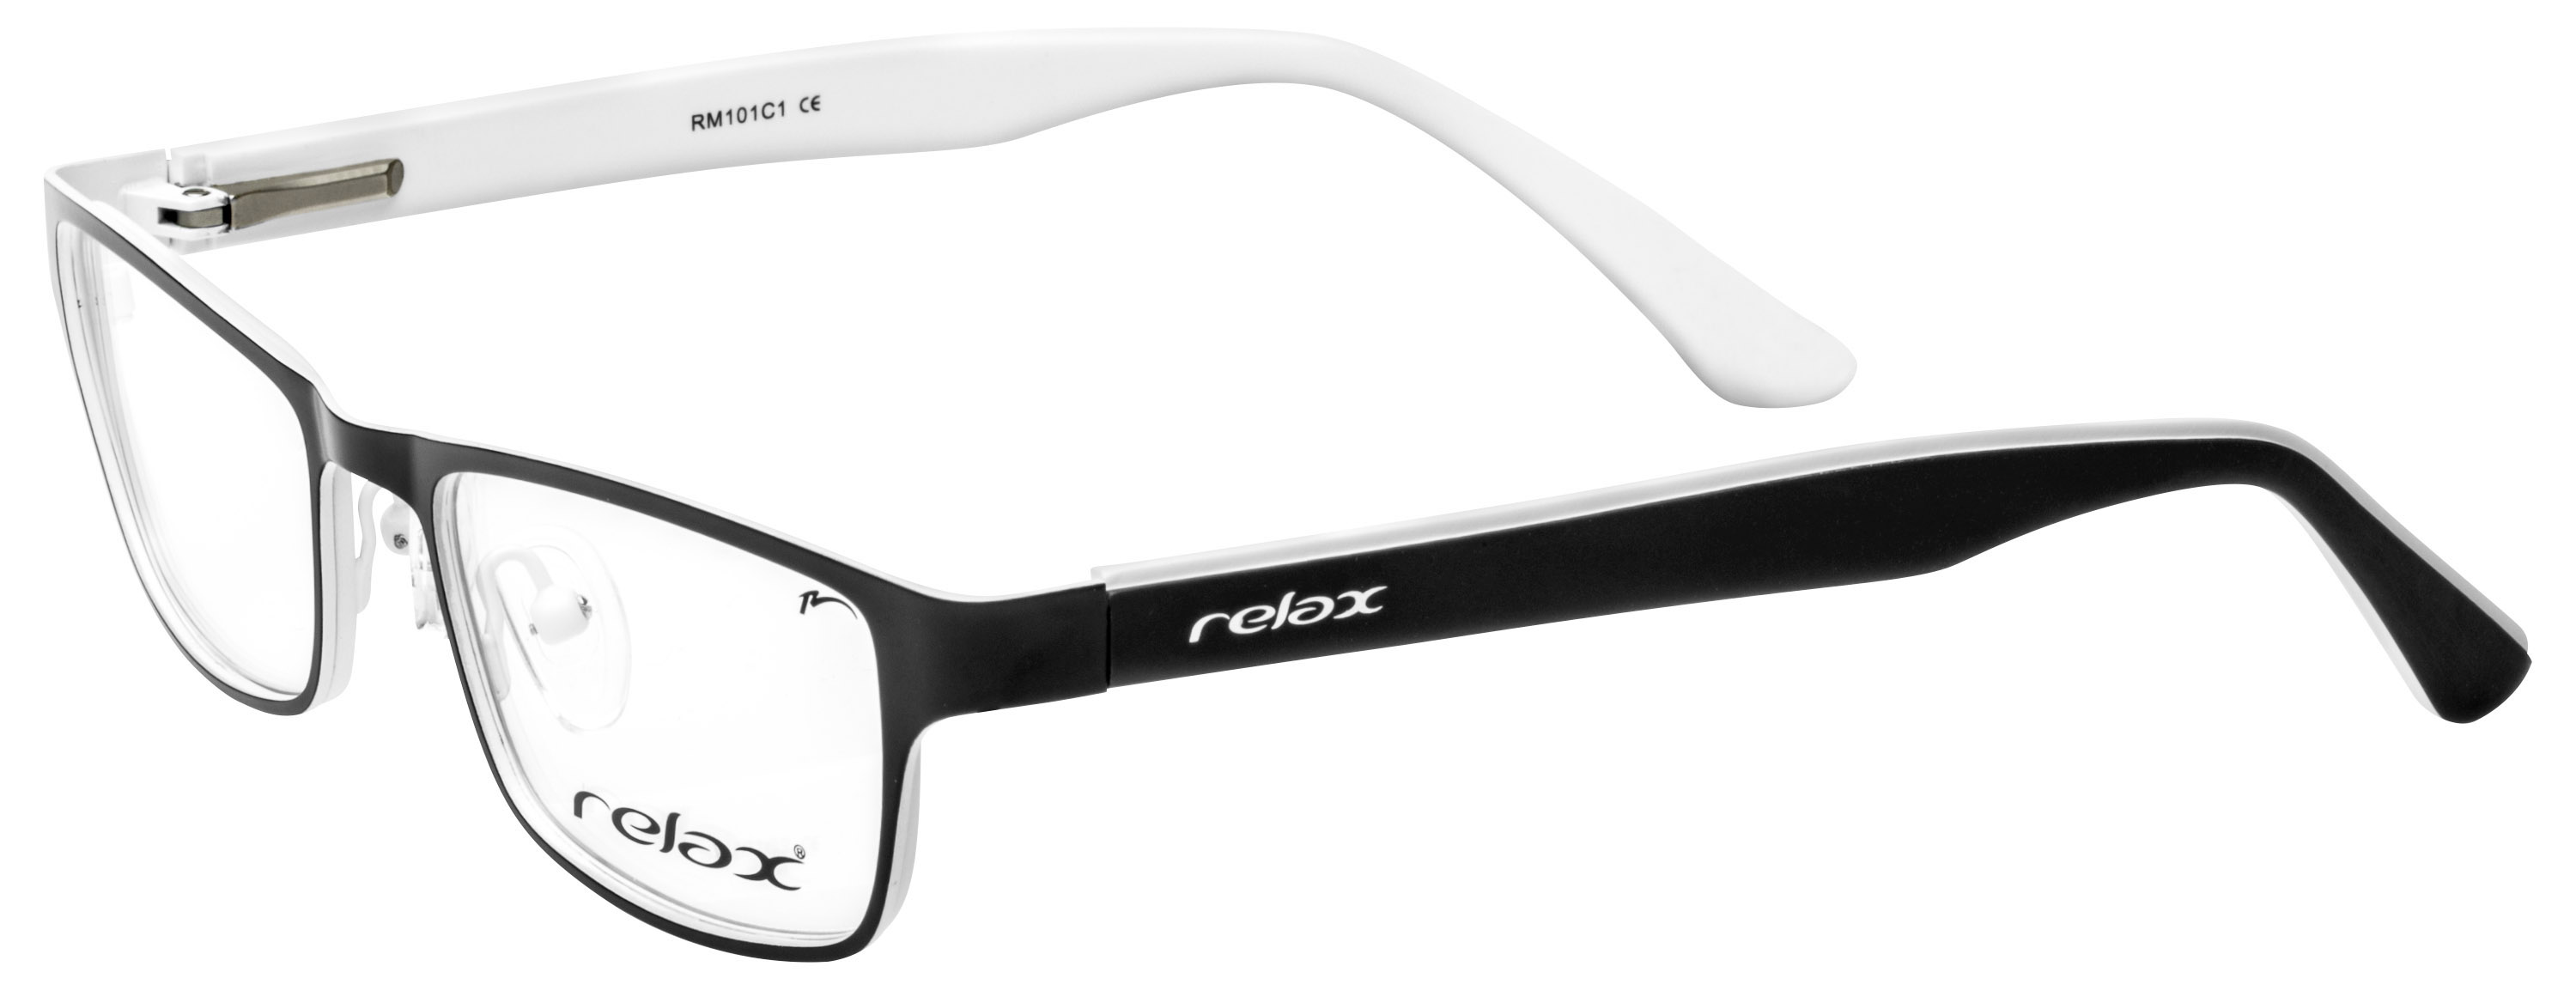 Dětské dioptrické brýle Relax Koki RM101C1 -